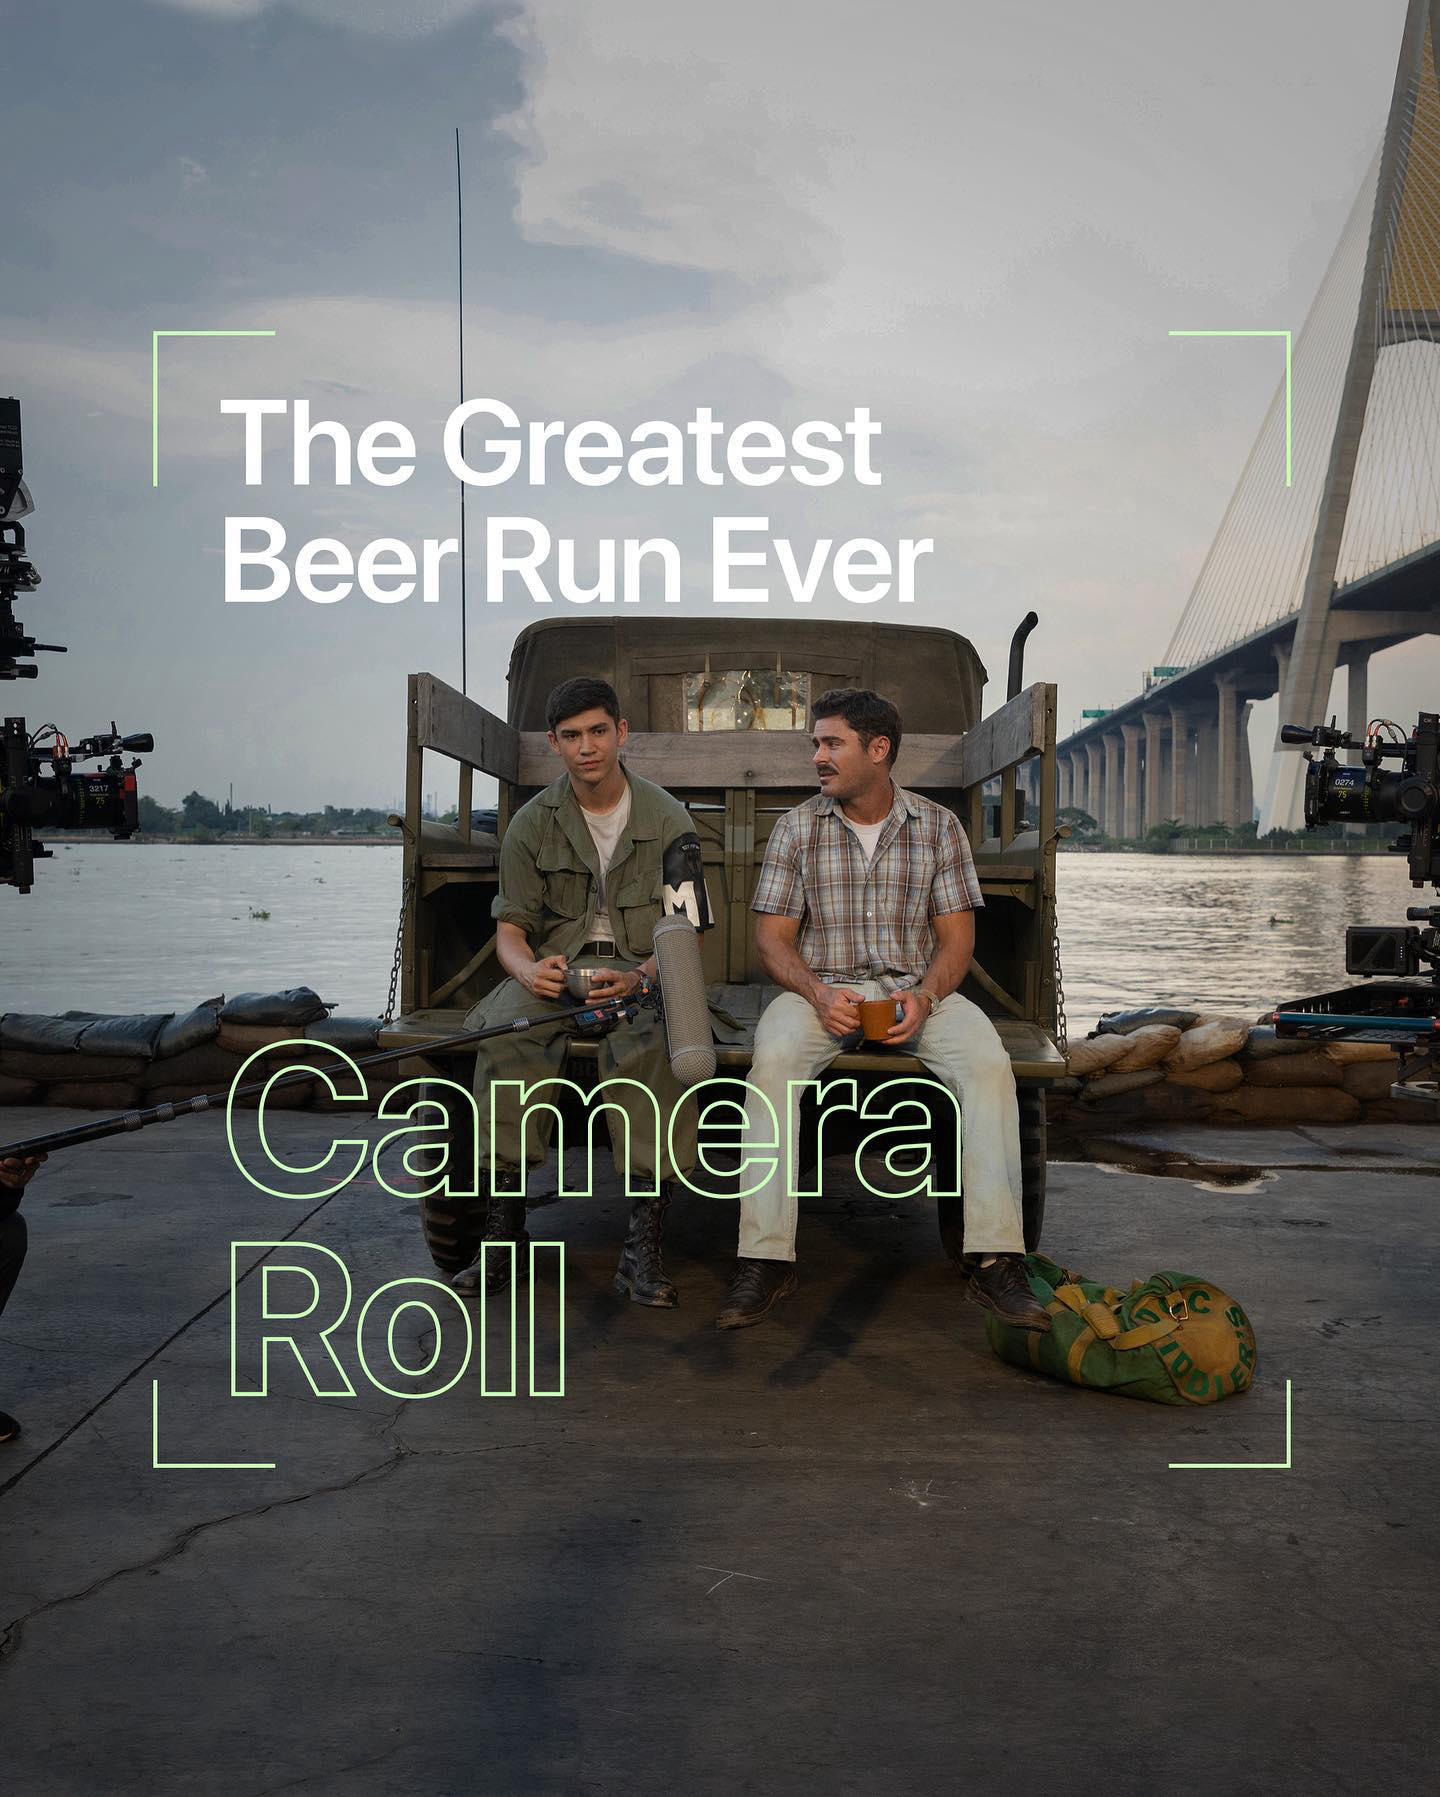 Apple TV+ - Film imitates real life in the new Apple Original film #TheGreatestBeerRunEver, based on